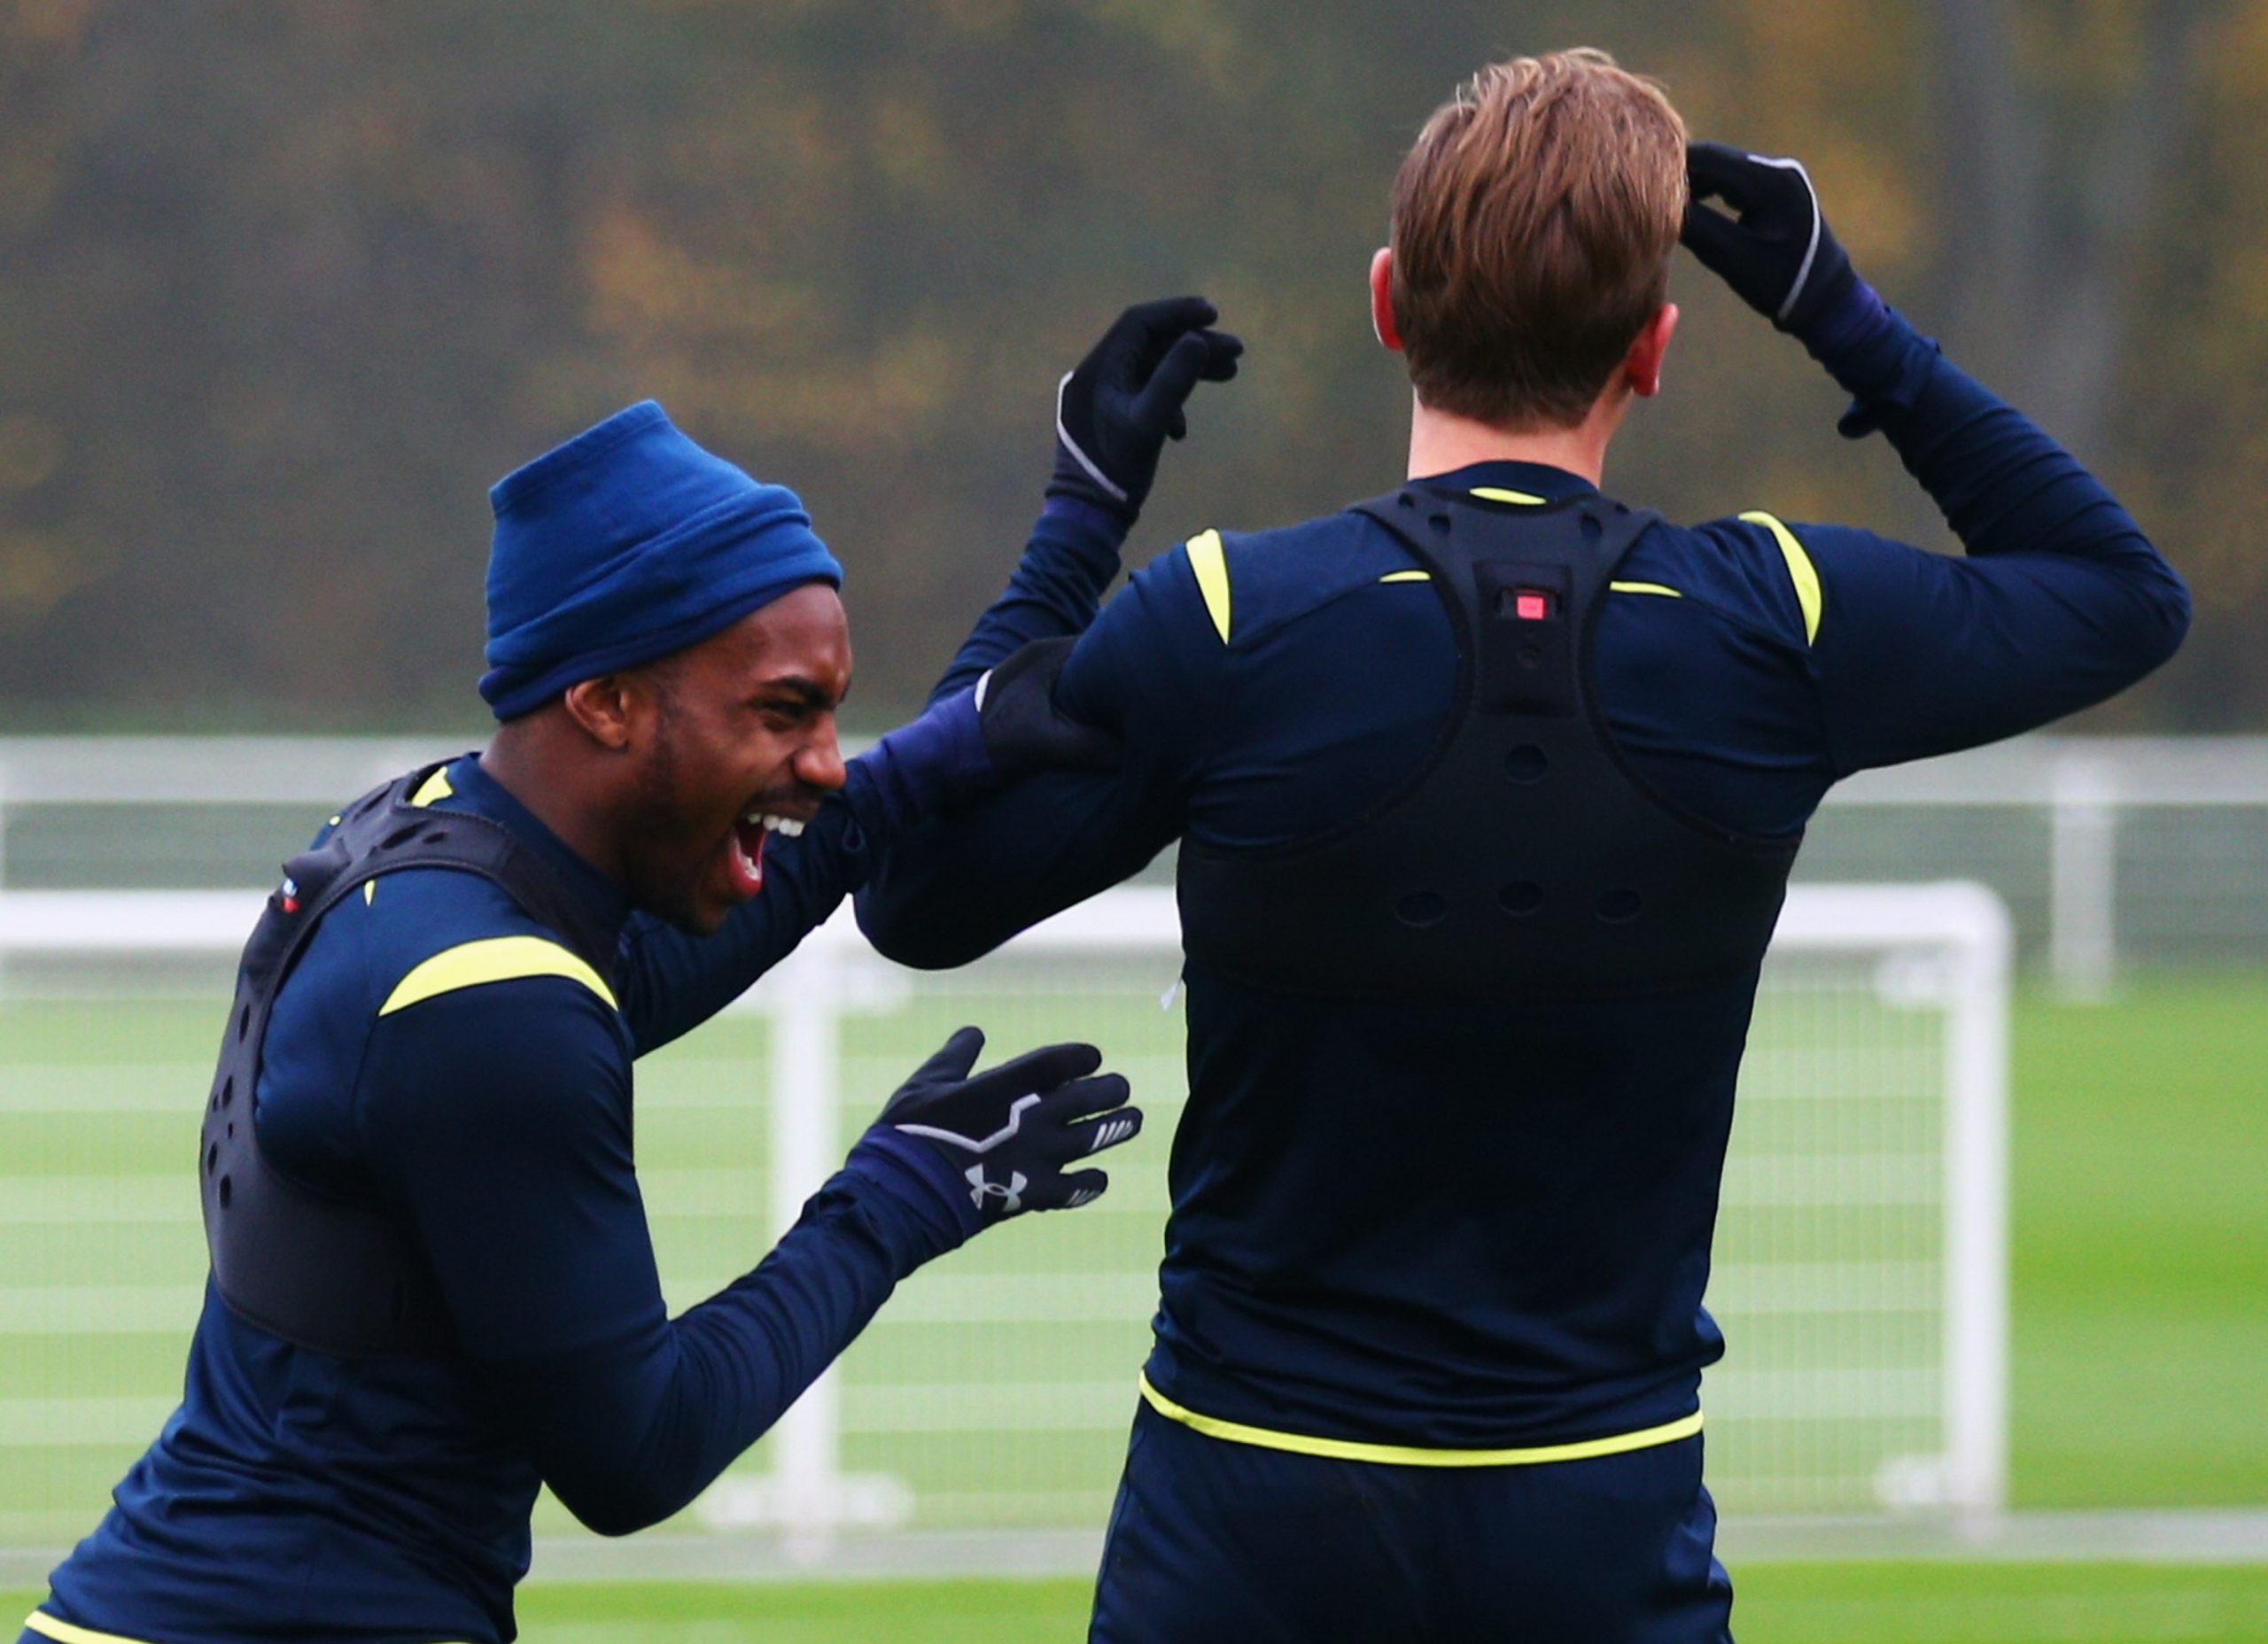 Danny Rose (L) jokes with Harry Kane during a Tottenham Hotspur FC training session - November 2014.